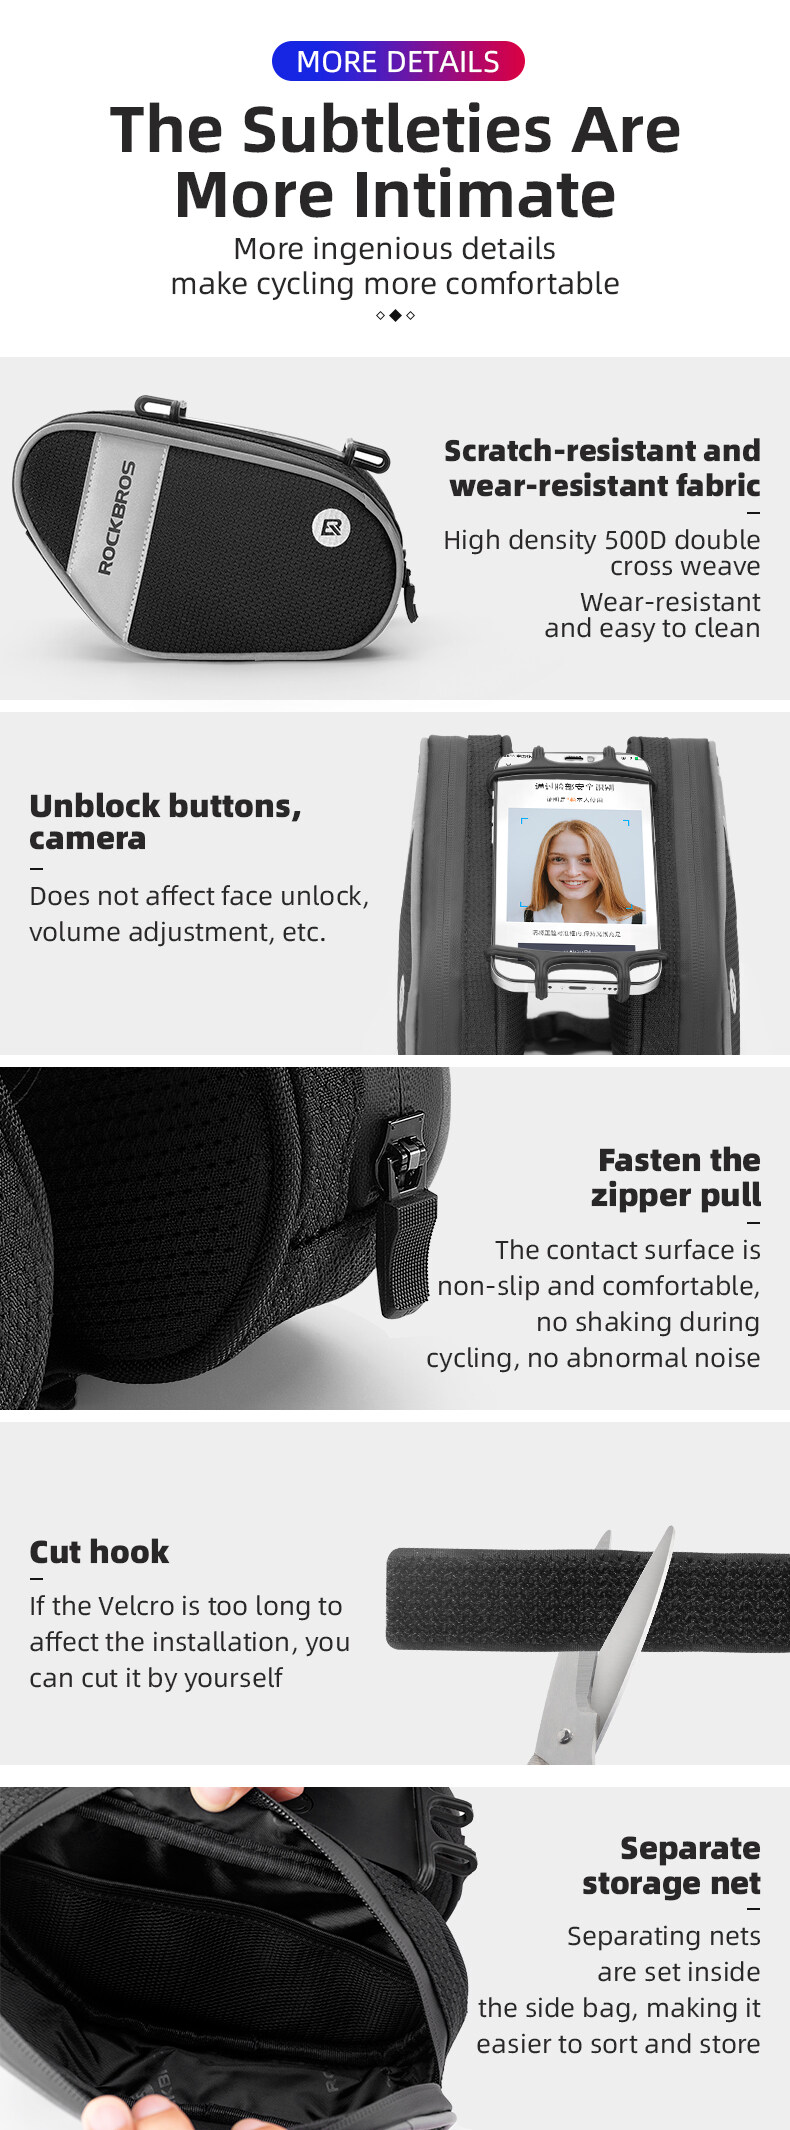 ROCKBROS Bicycle Bag Front Tube Bag Frame Bag With 360° Rotation Phone Holder Bike Pouch